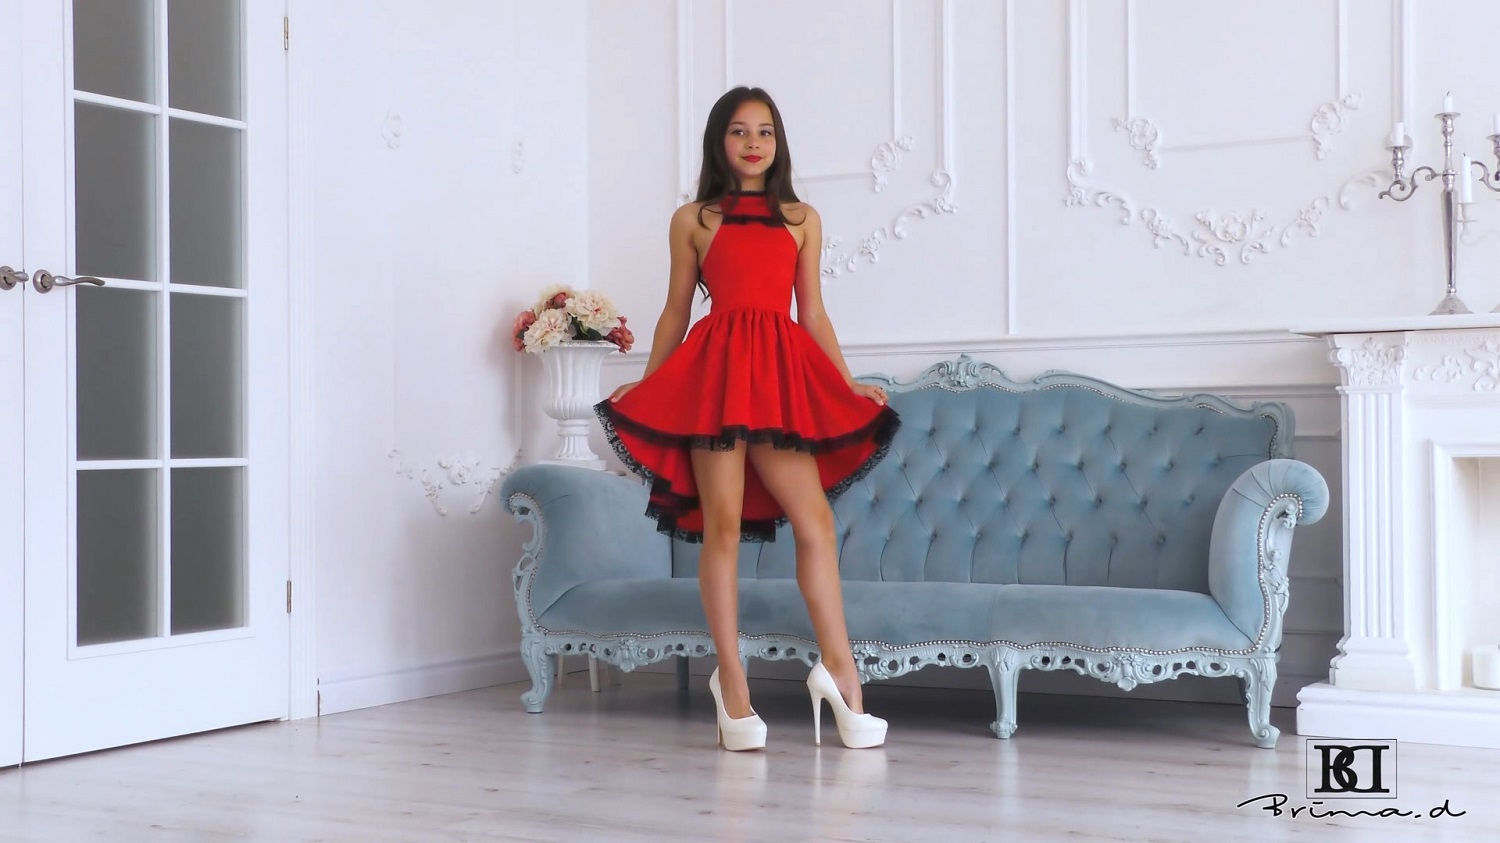 brima-Gabrielle red dress-01.jpg